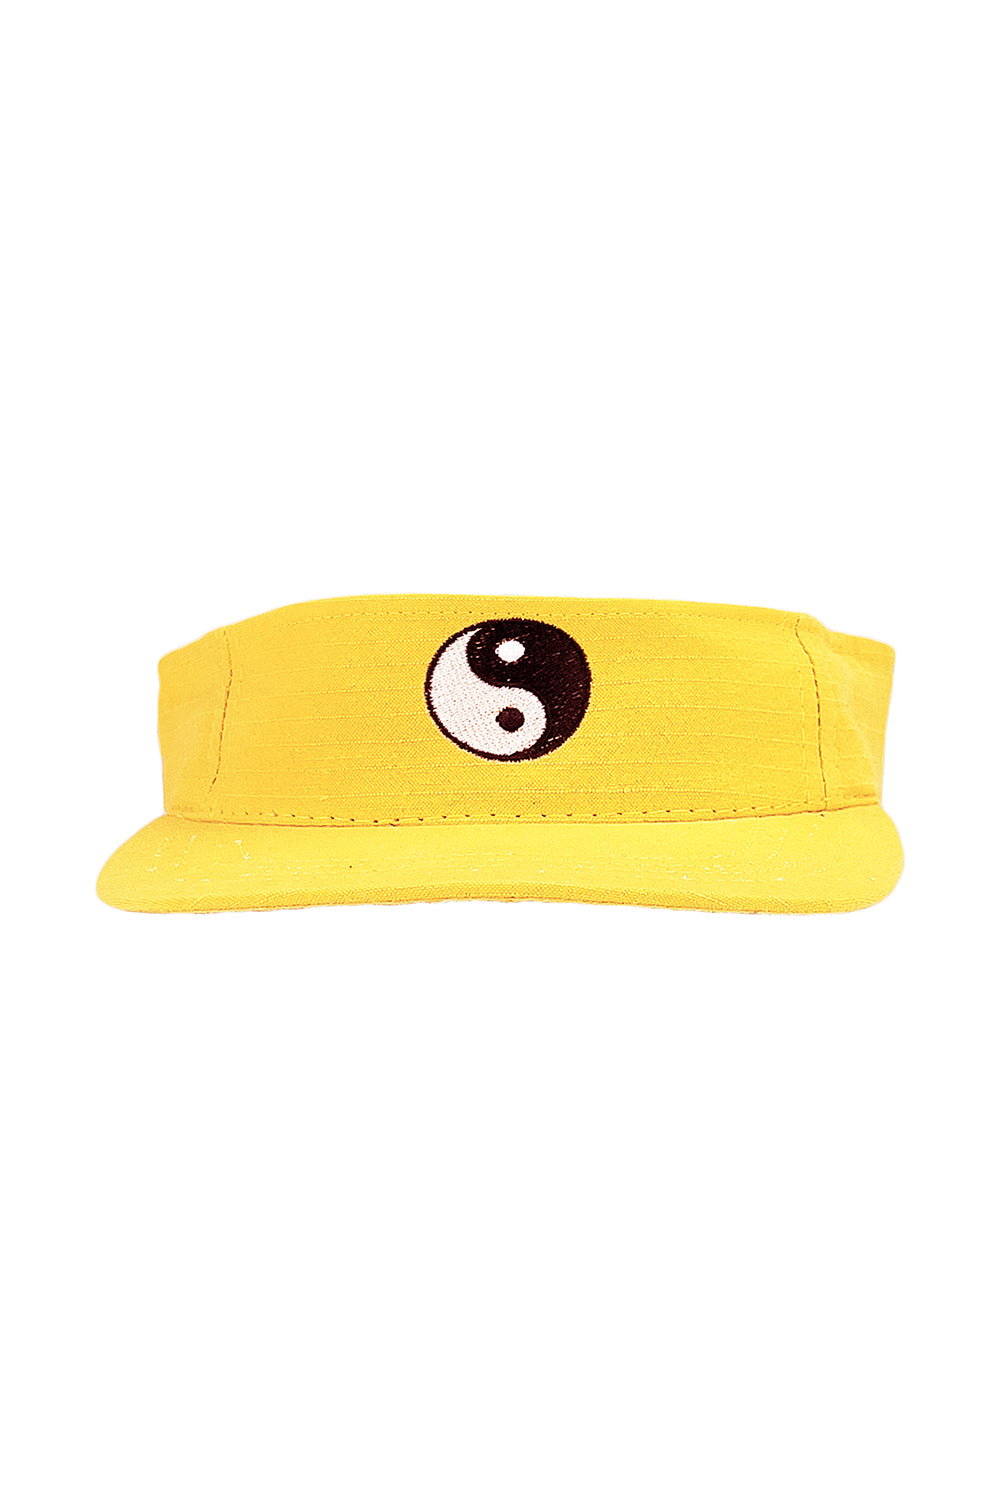 Yin Yang Ripstop Visor | Jungmaven Hemp Clothing & Accessories / Color: Sunshine Yellow